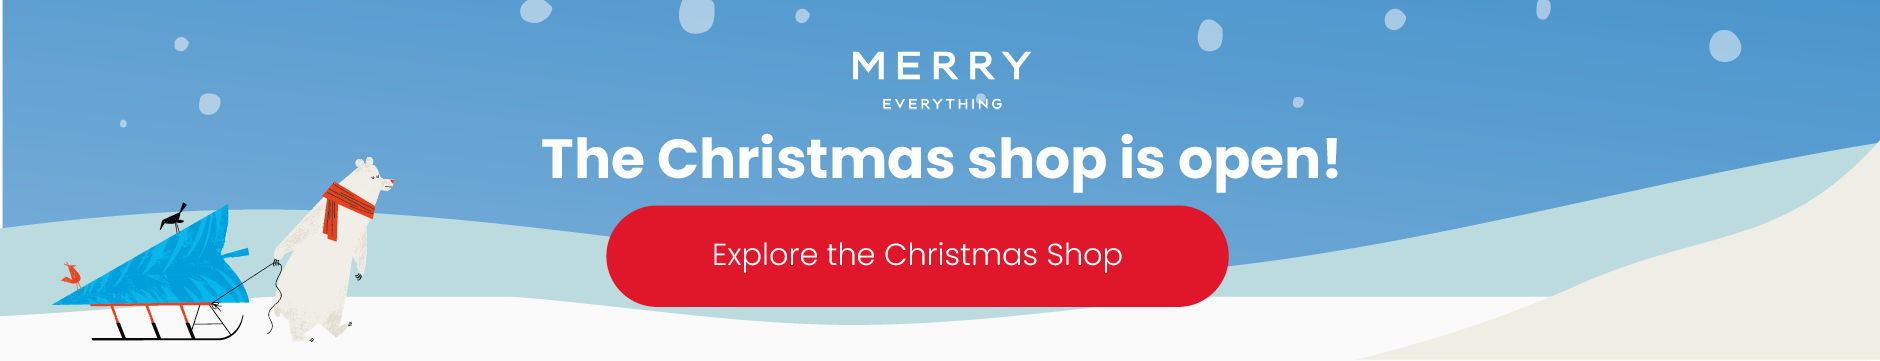 Christmas Shop is Open